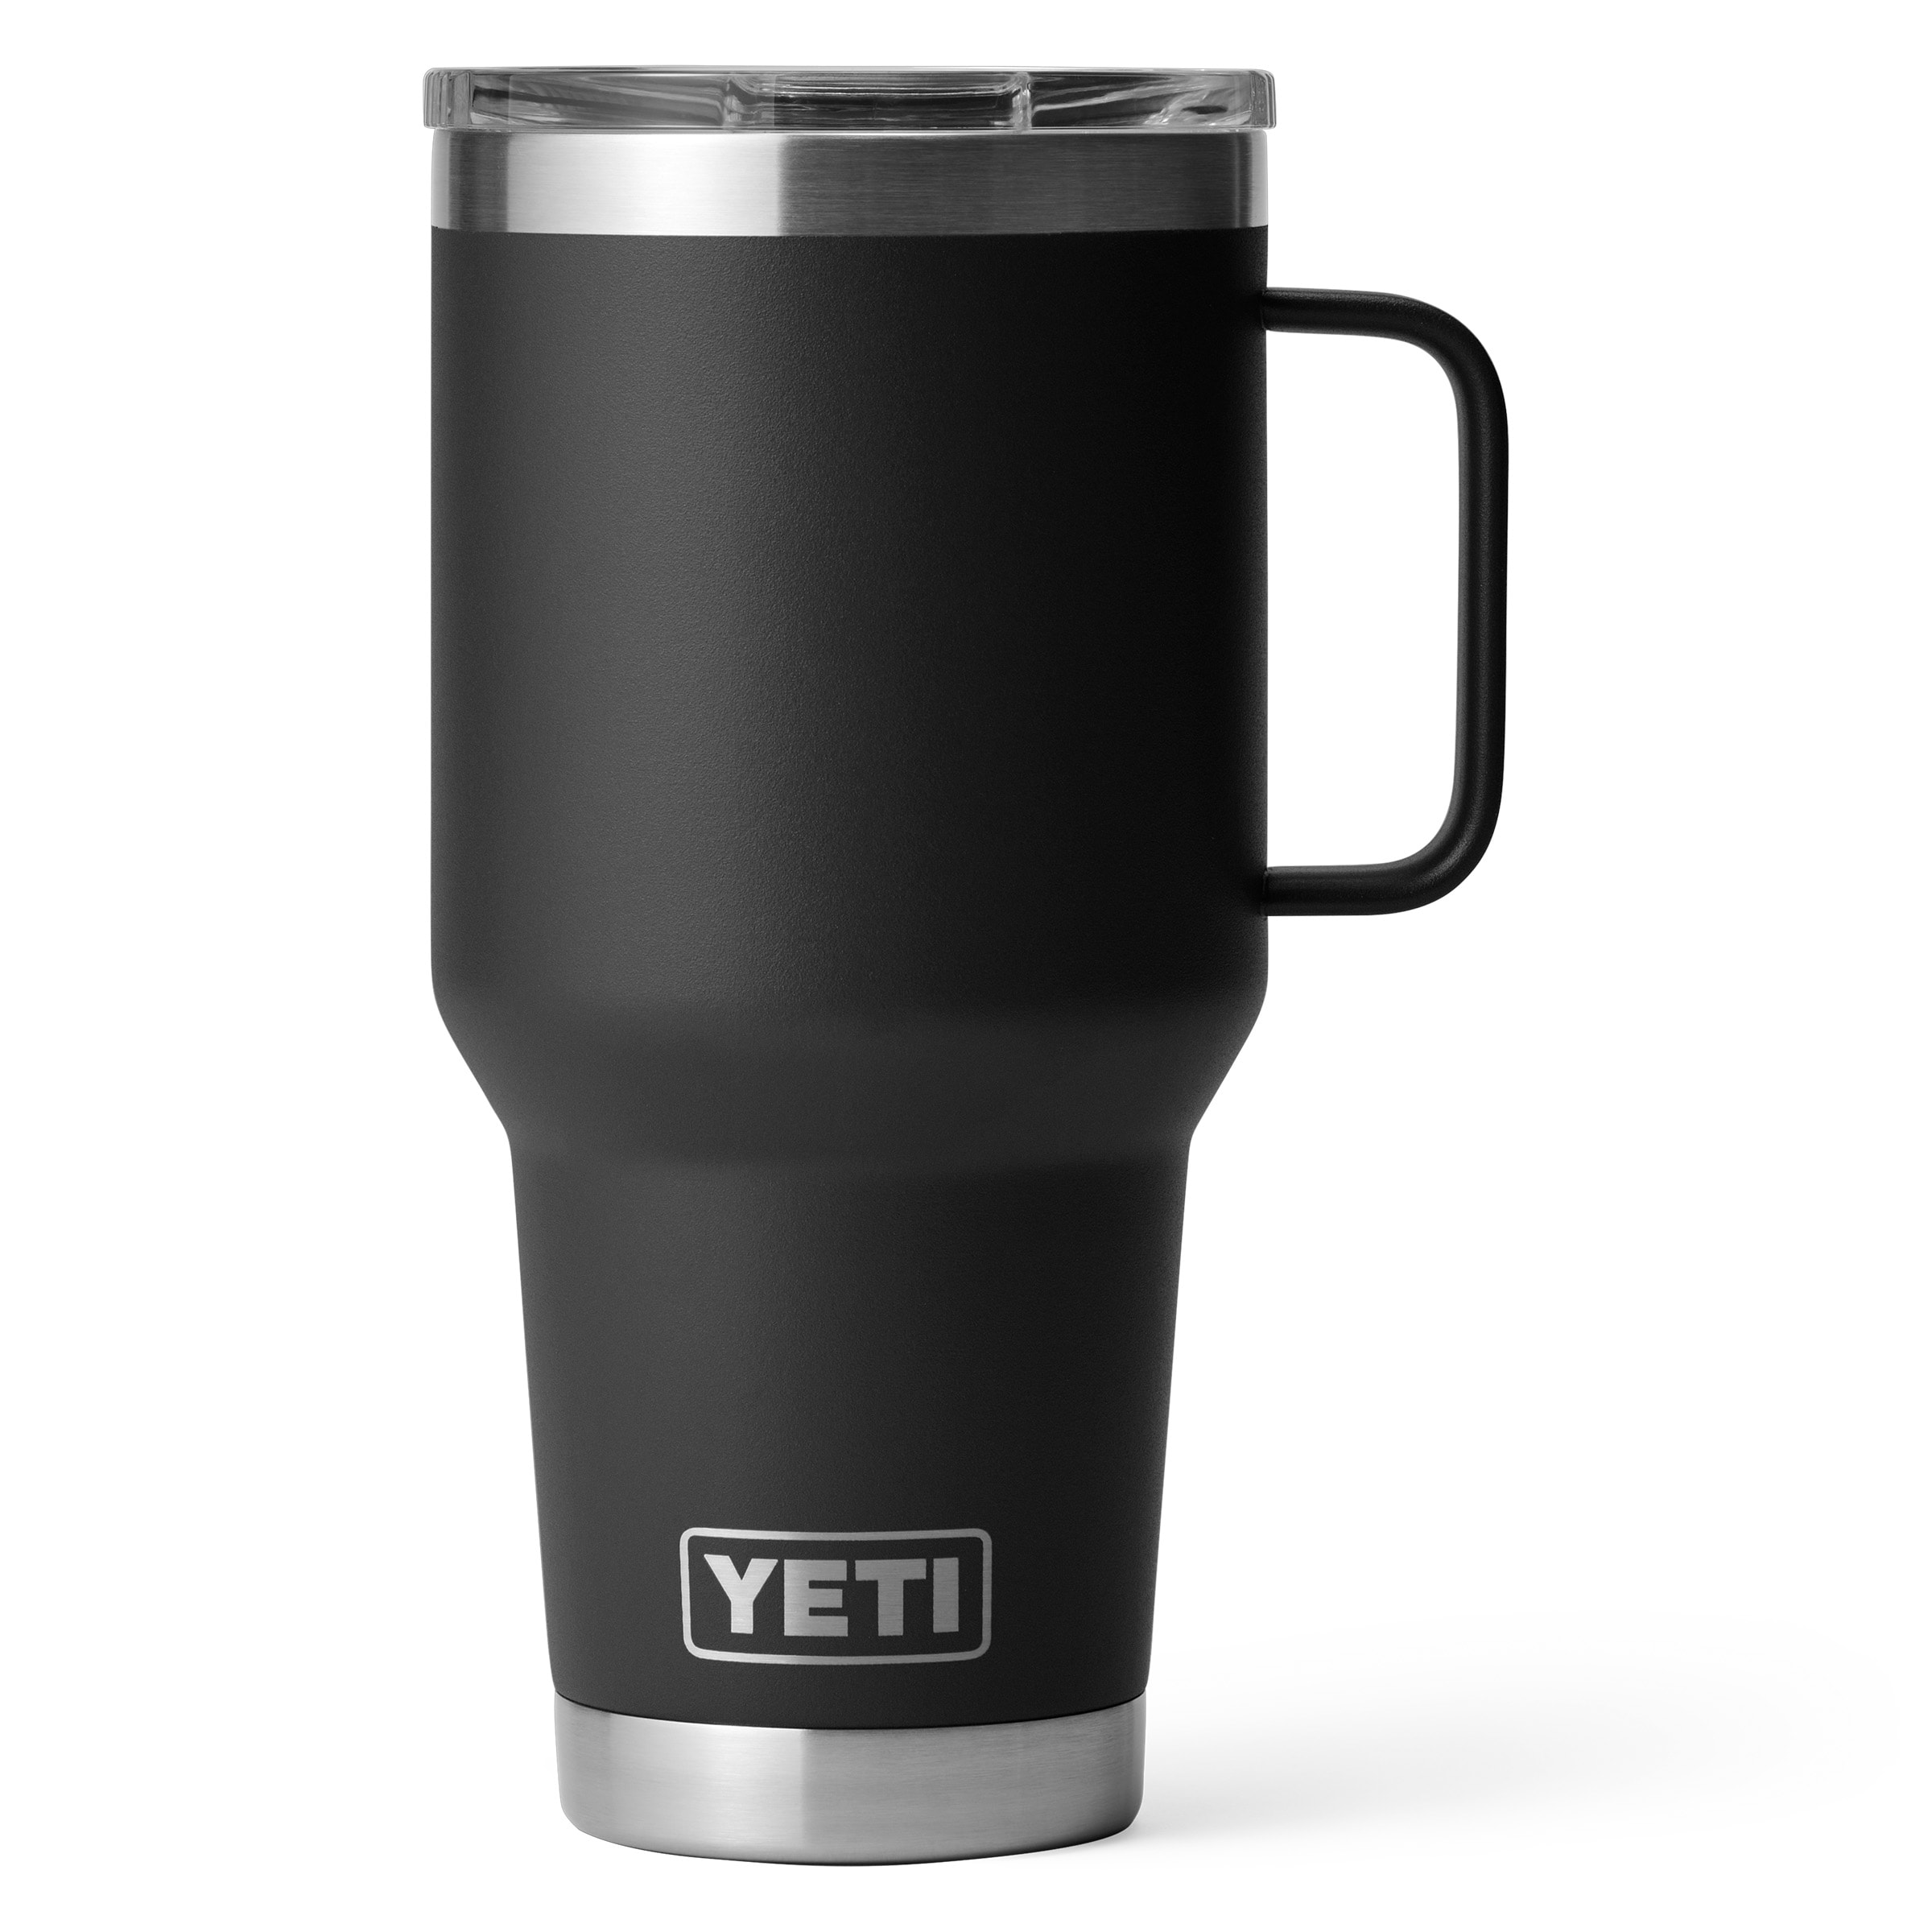 YETI Rambler 30 oz Travel Mug with Stronghold Lid, Black